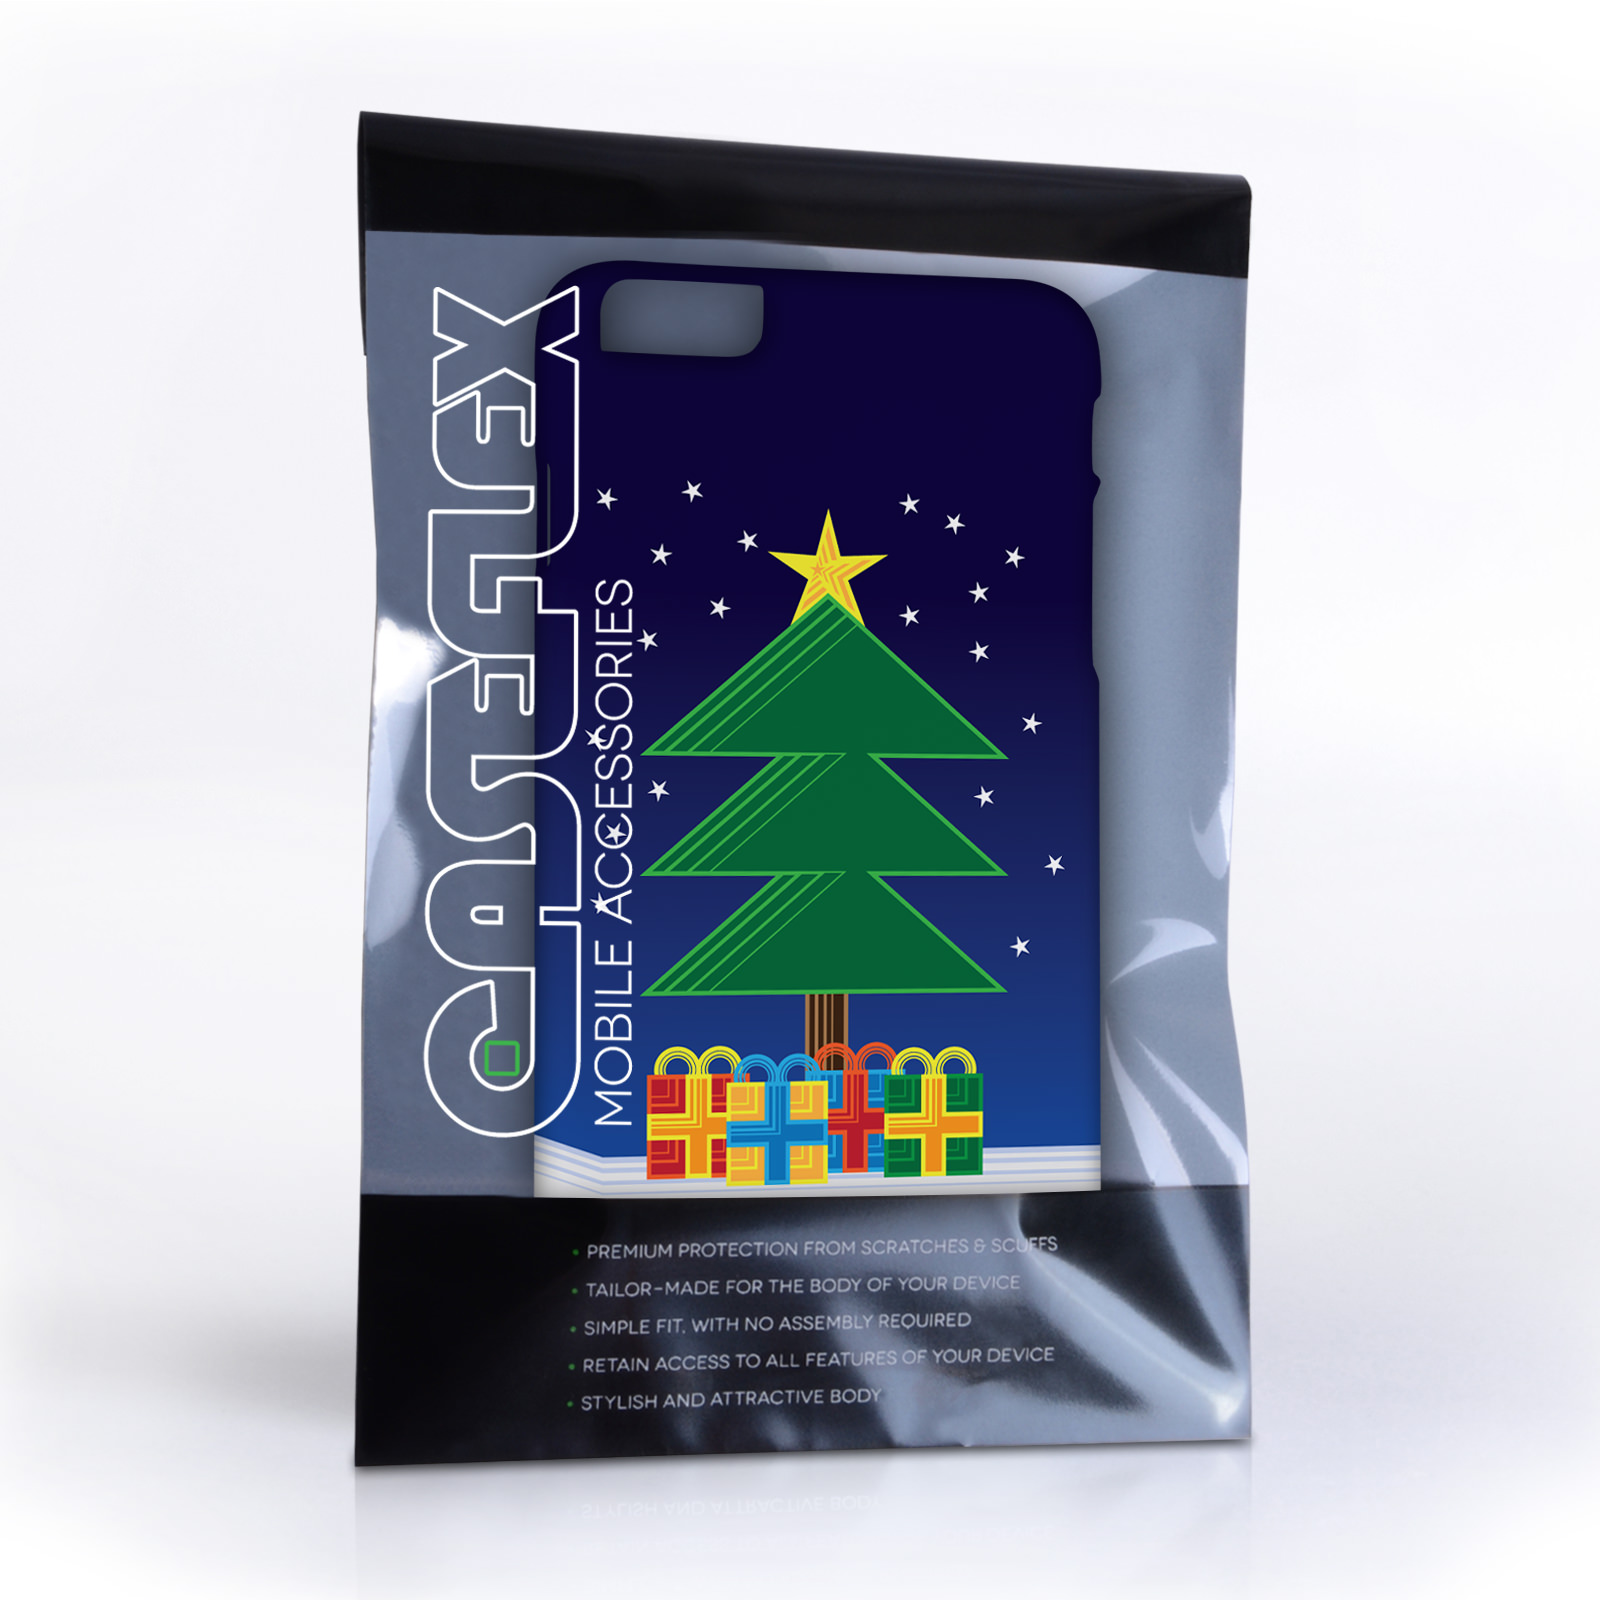 Caseflex iPhone 6 Plus and 6s Plus Christmas Night Tree & Presents Hard Case